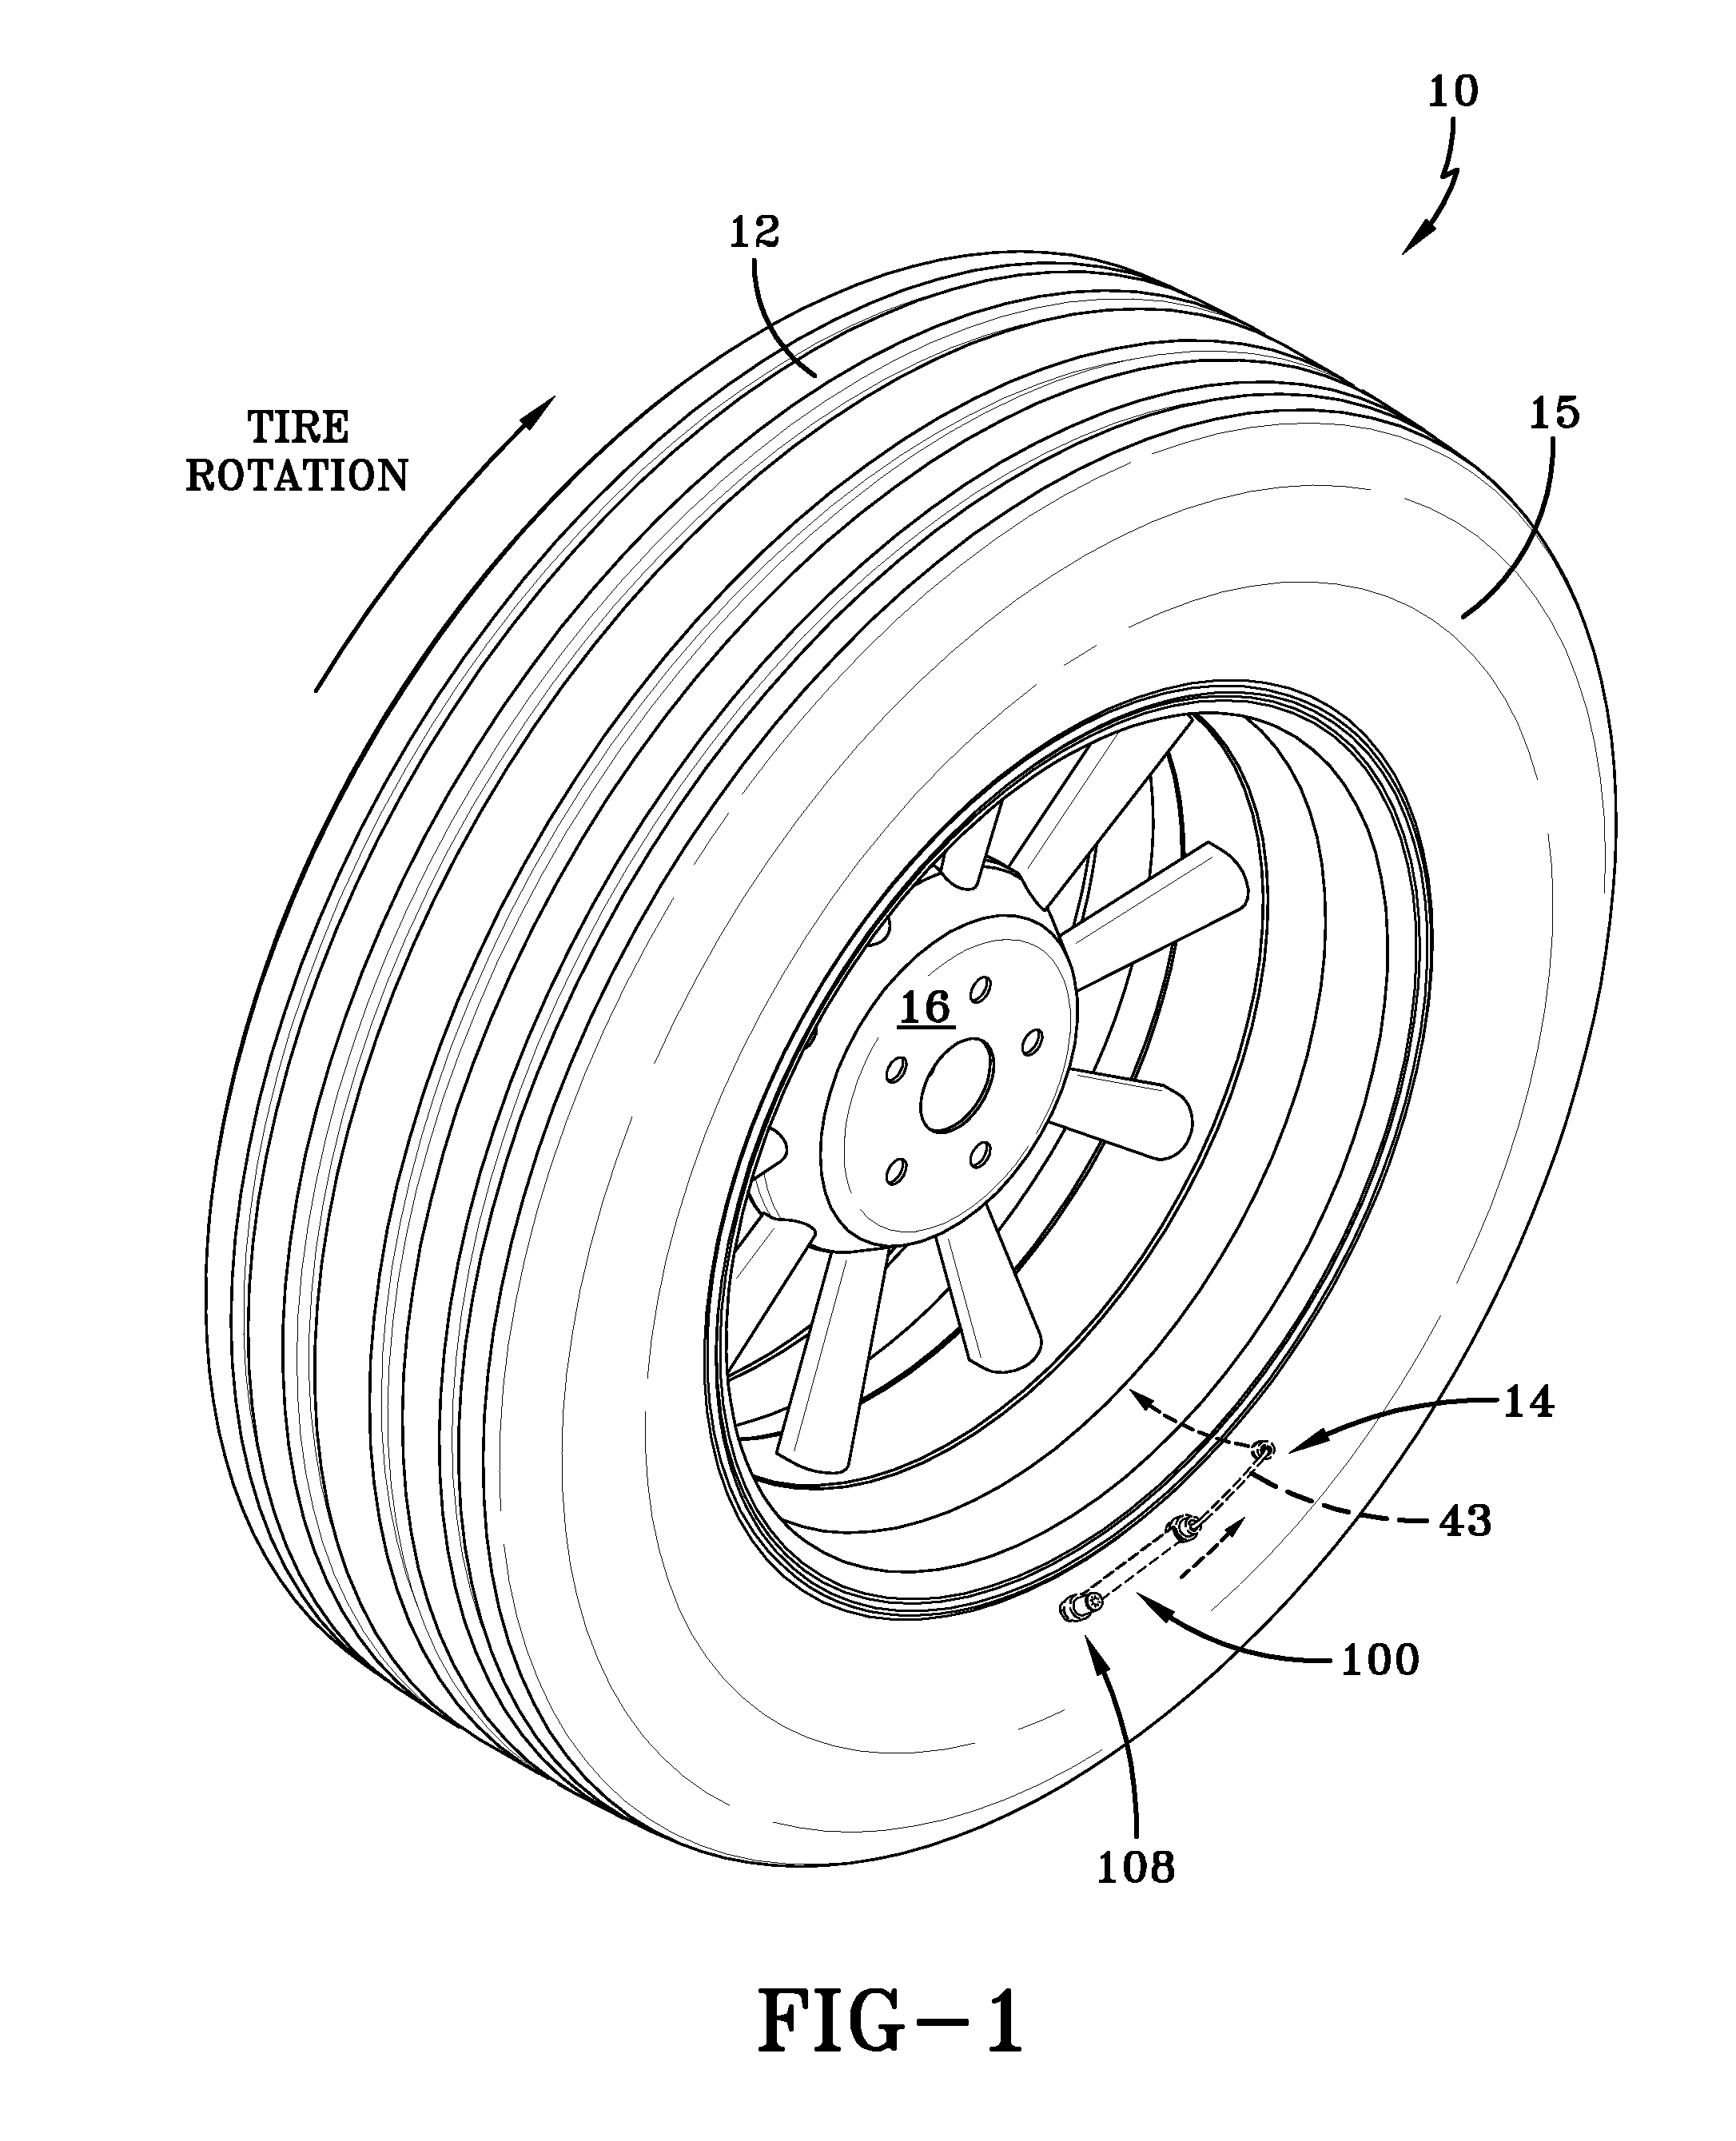 Self inflating tire with pressure regulator